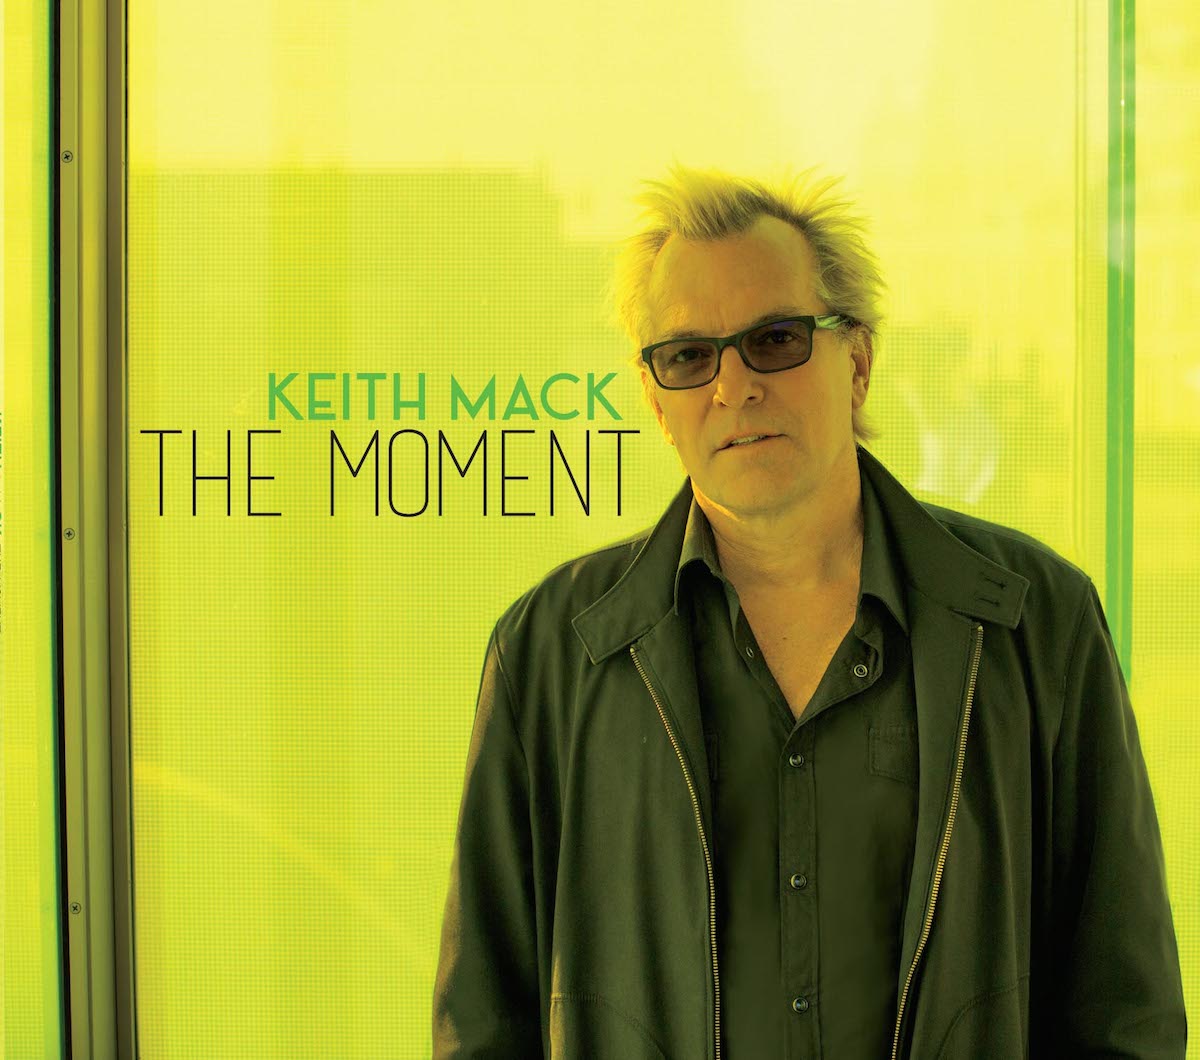 The Moment - Keith Mack (Album Cover)